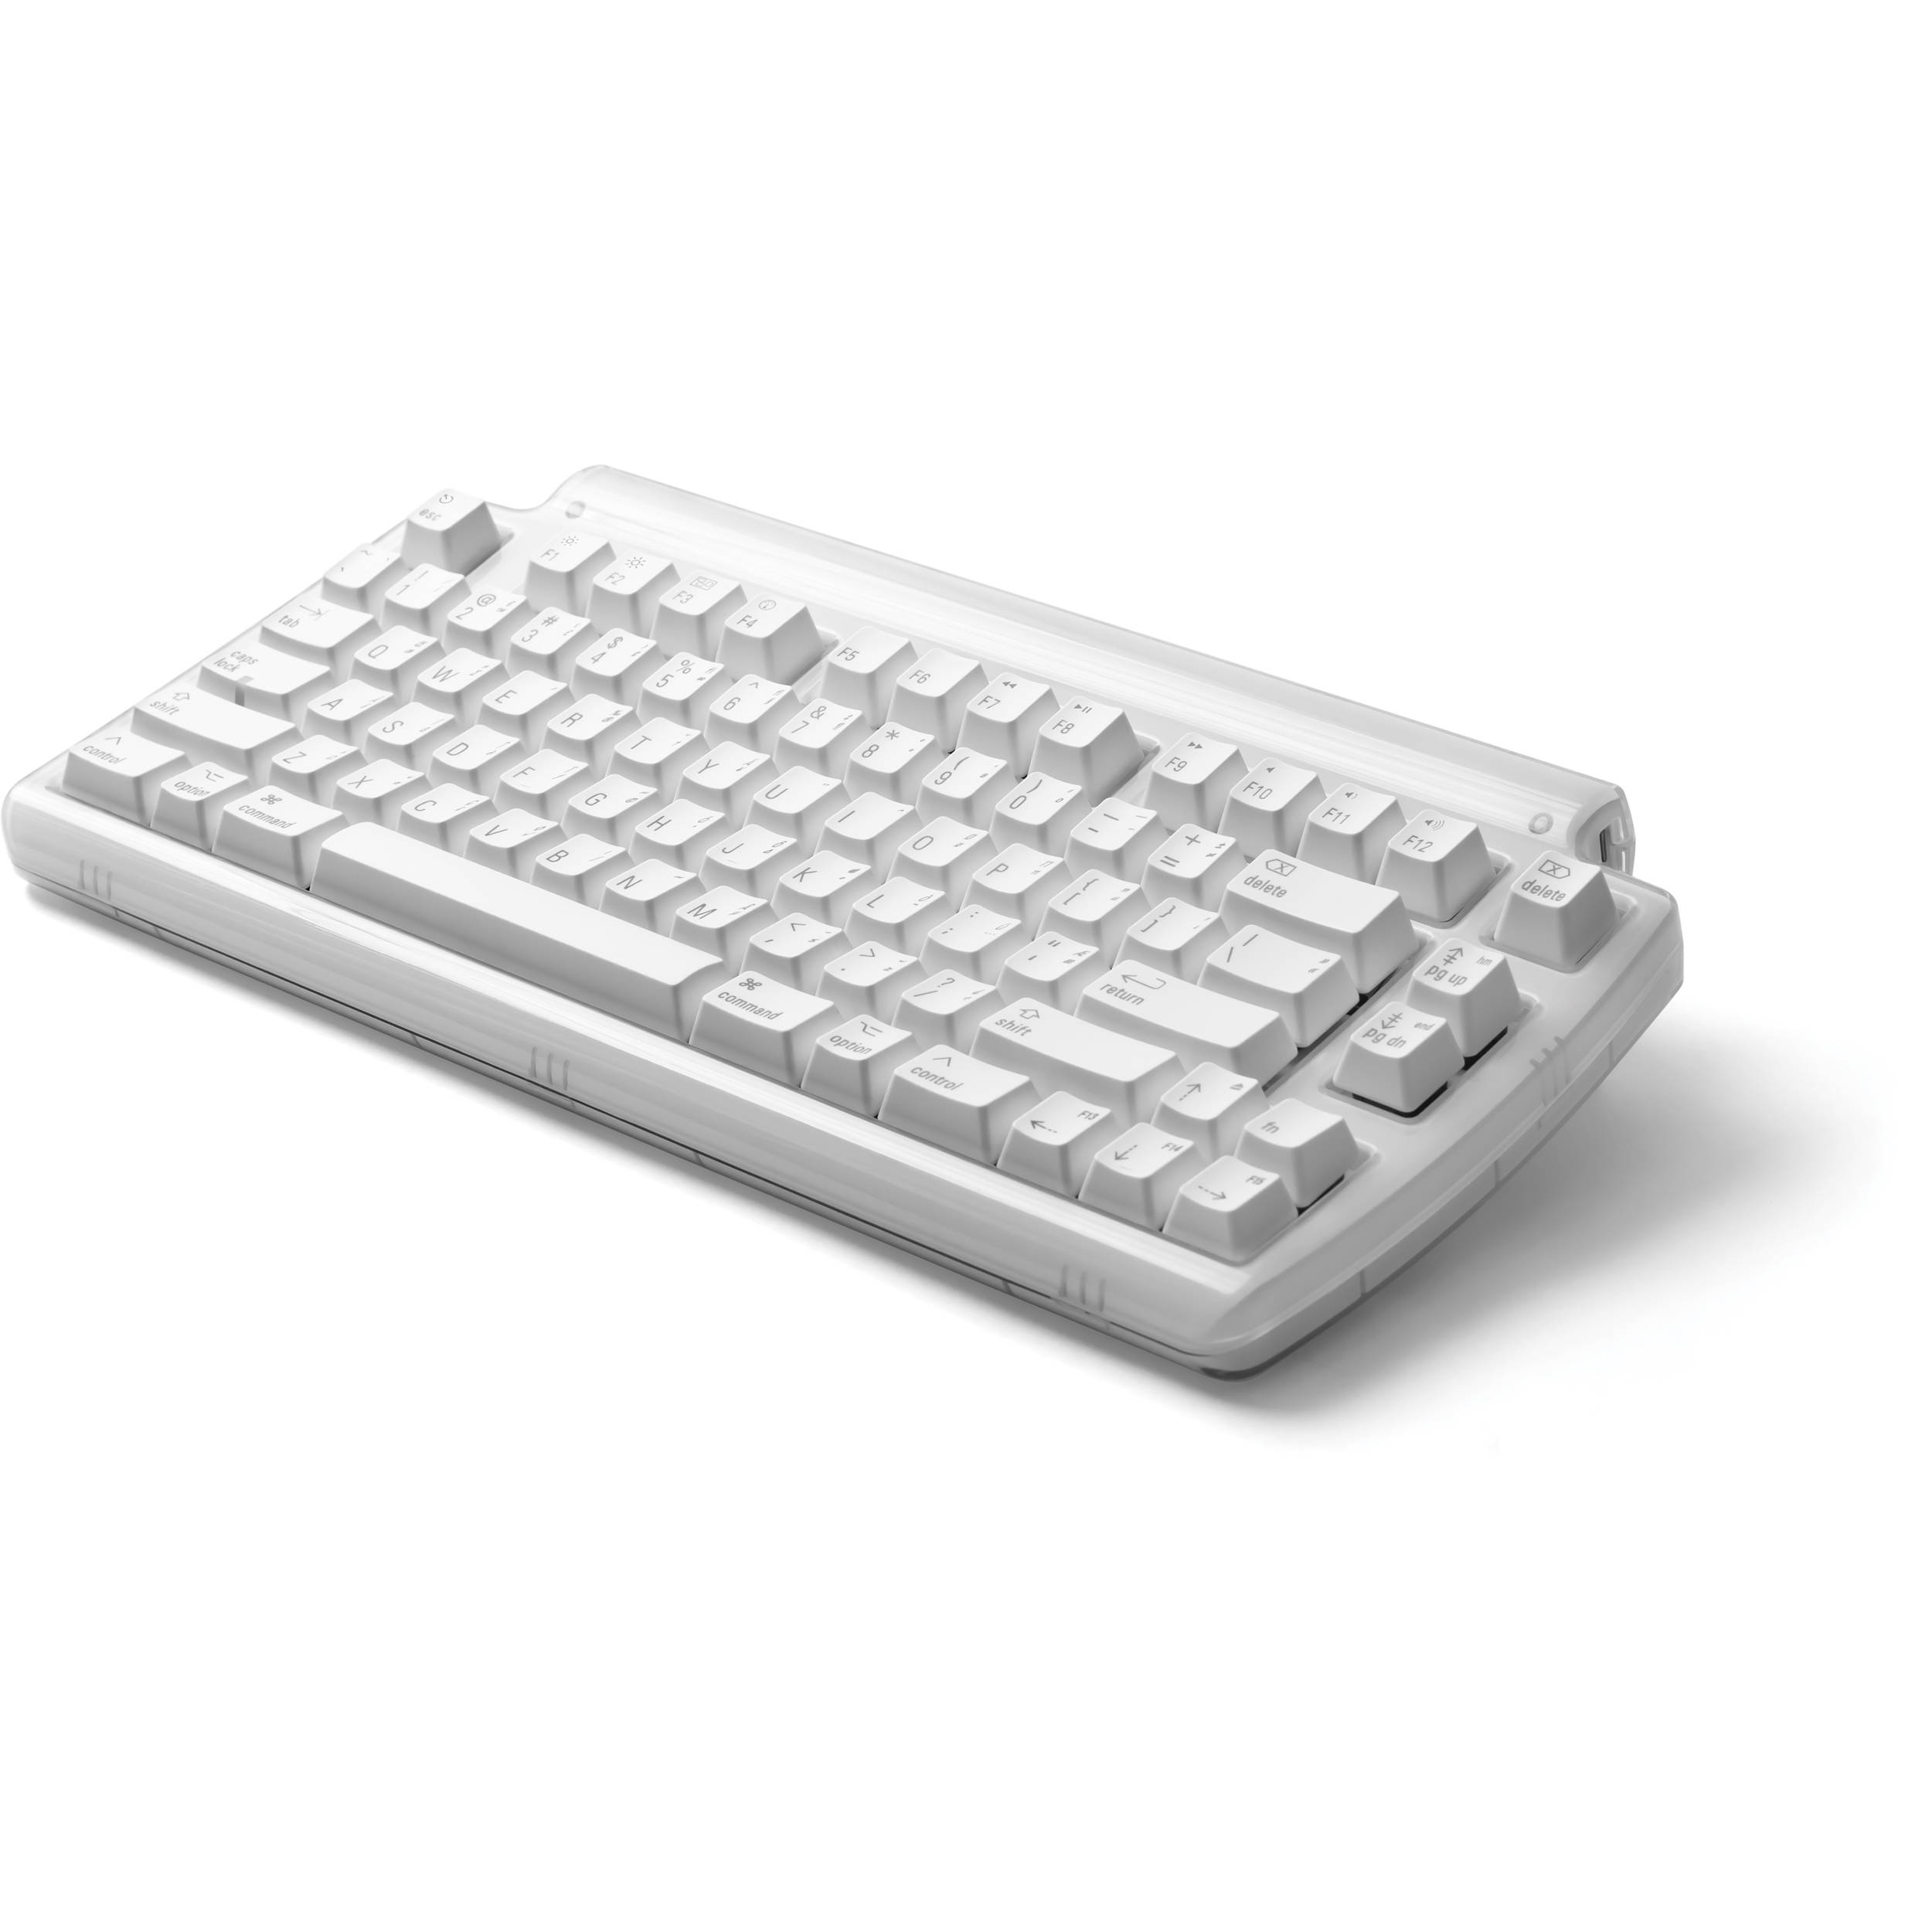 matias tactile pro 4.0 usb keyboard for mac